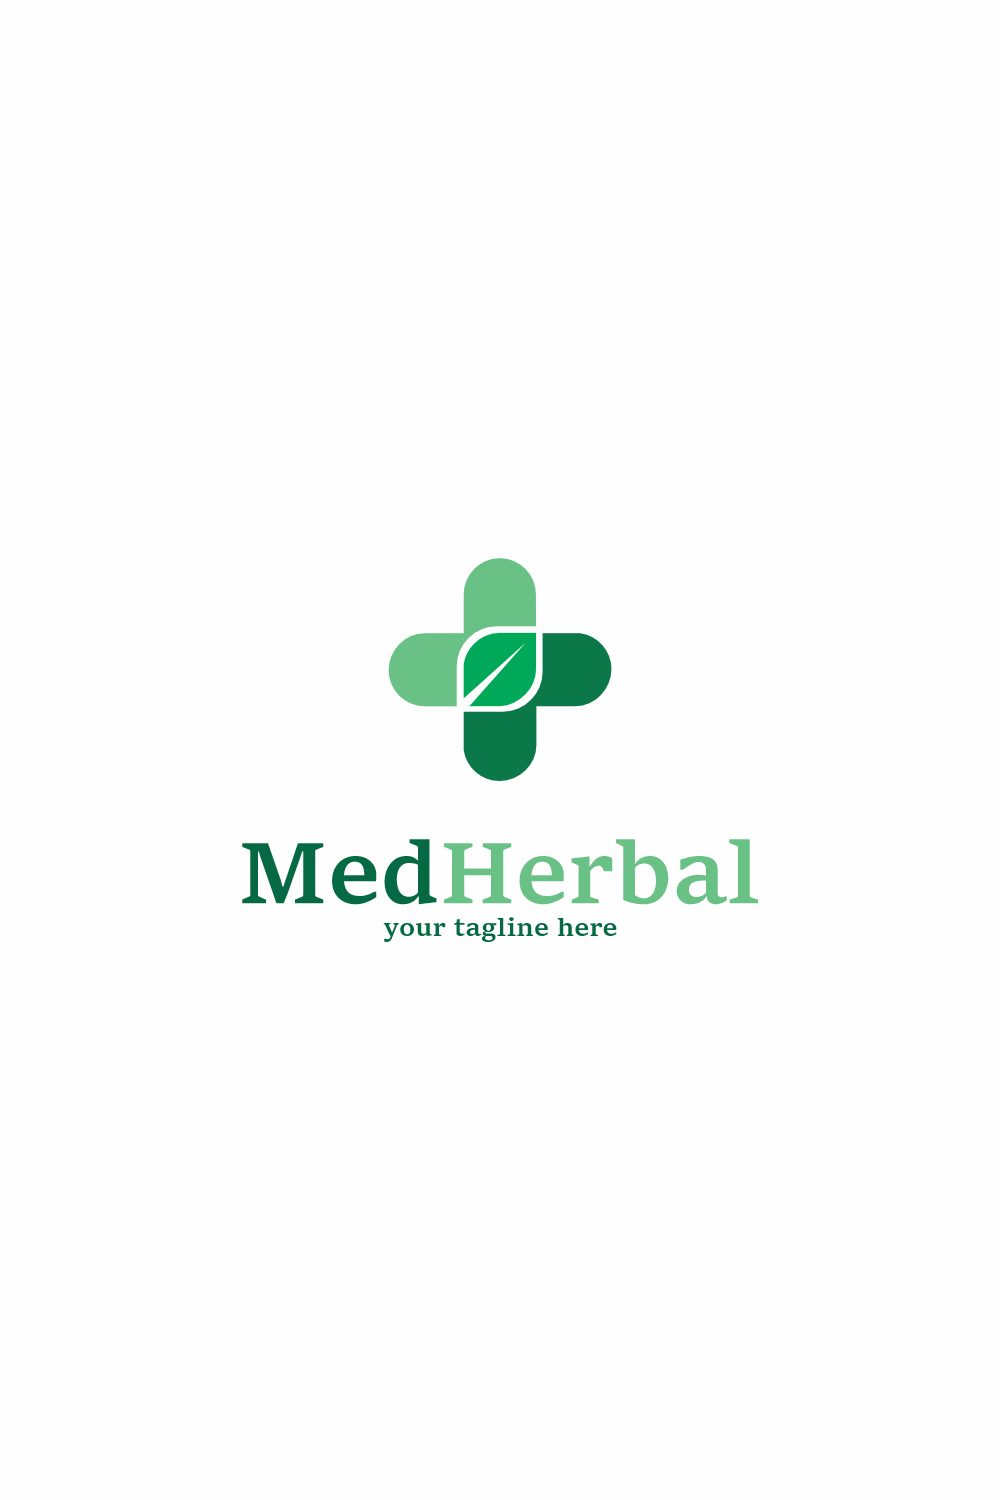 Natural Medical Logo pinterest preview image.